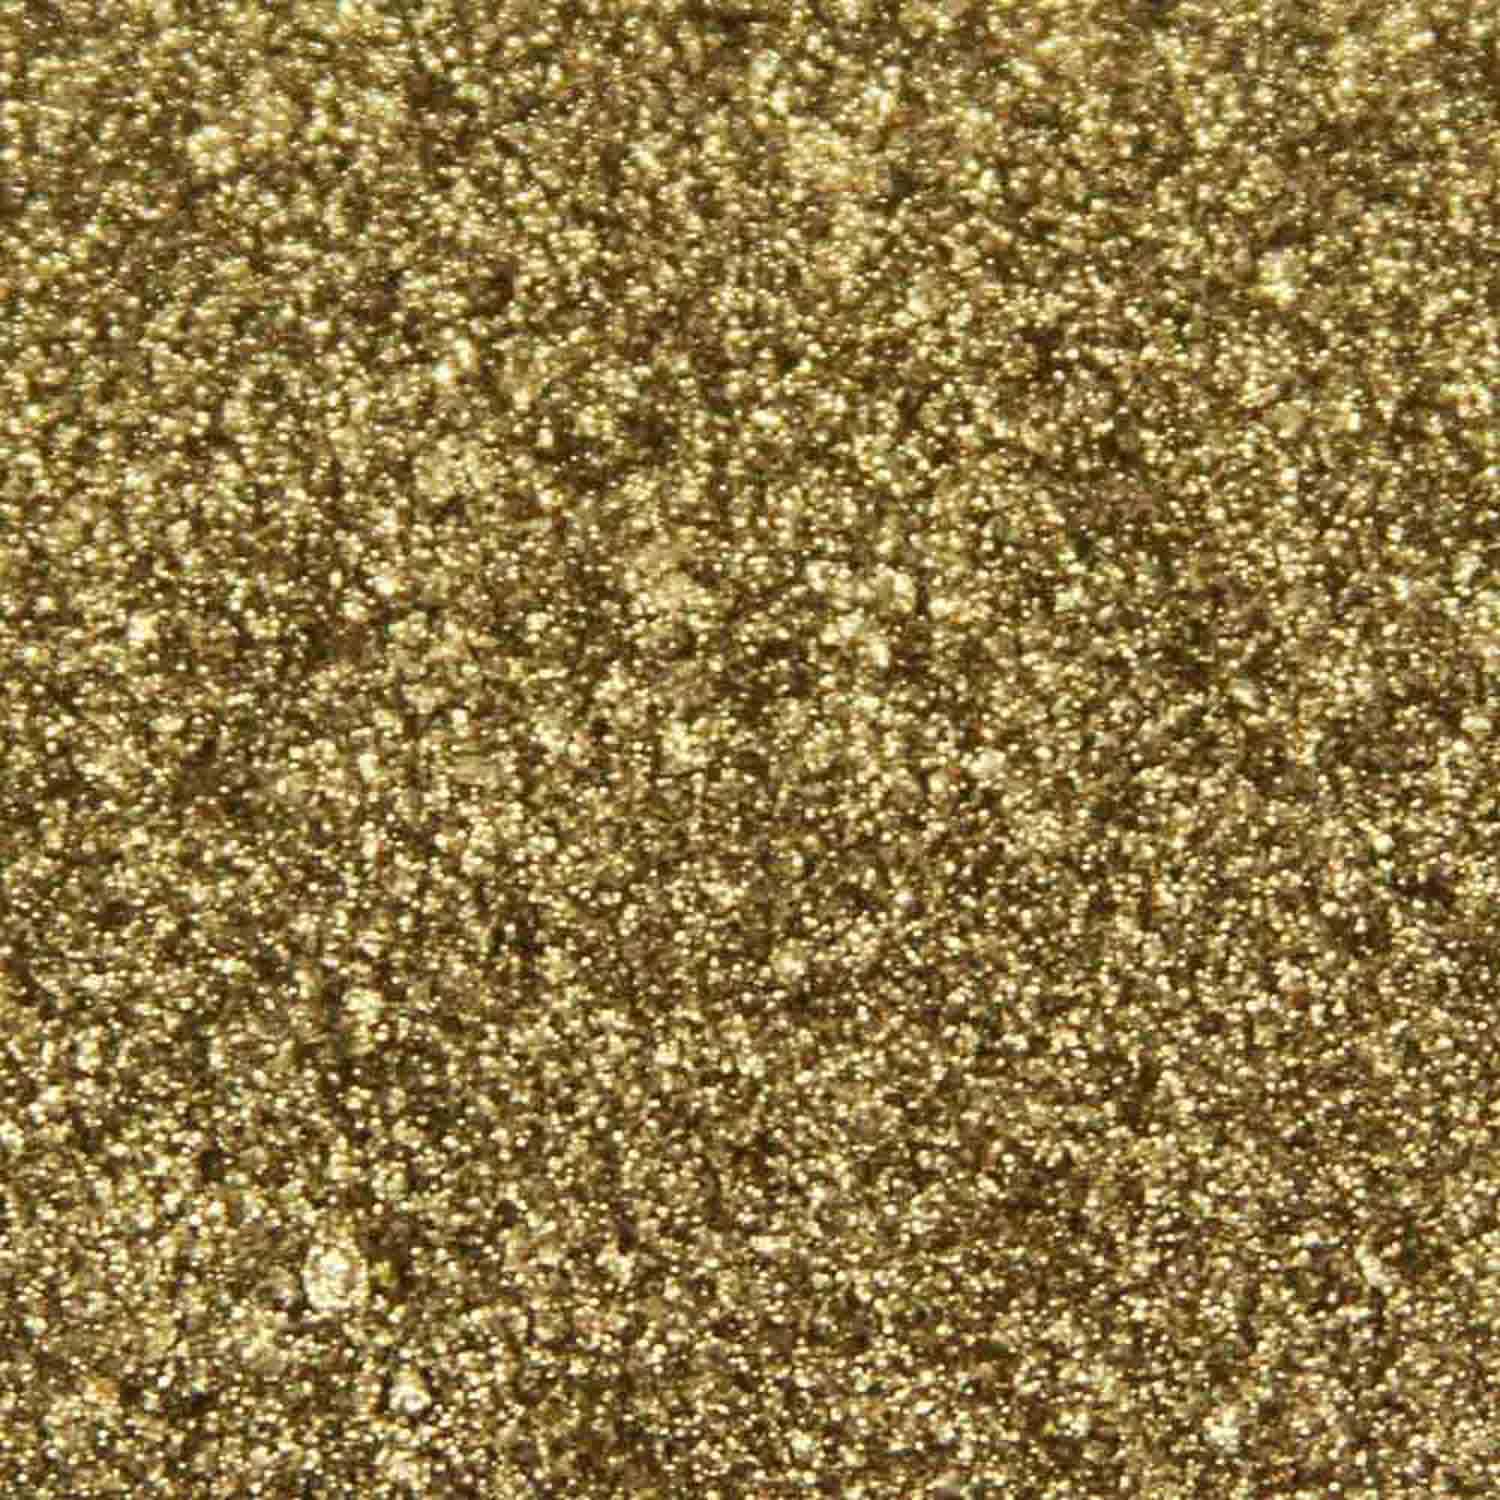 Imperial Metallic Gold Dust CK Products 4 Gram Jar